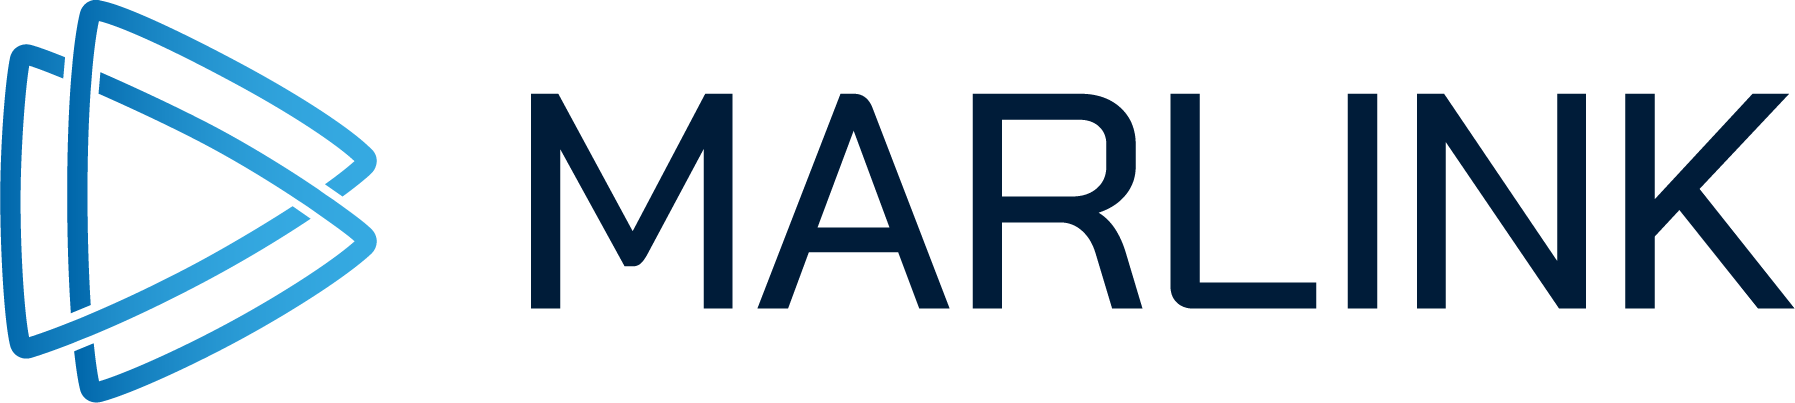 Marlink_Logo